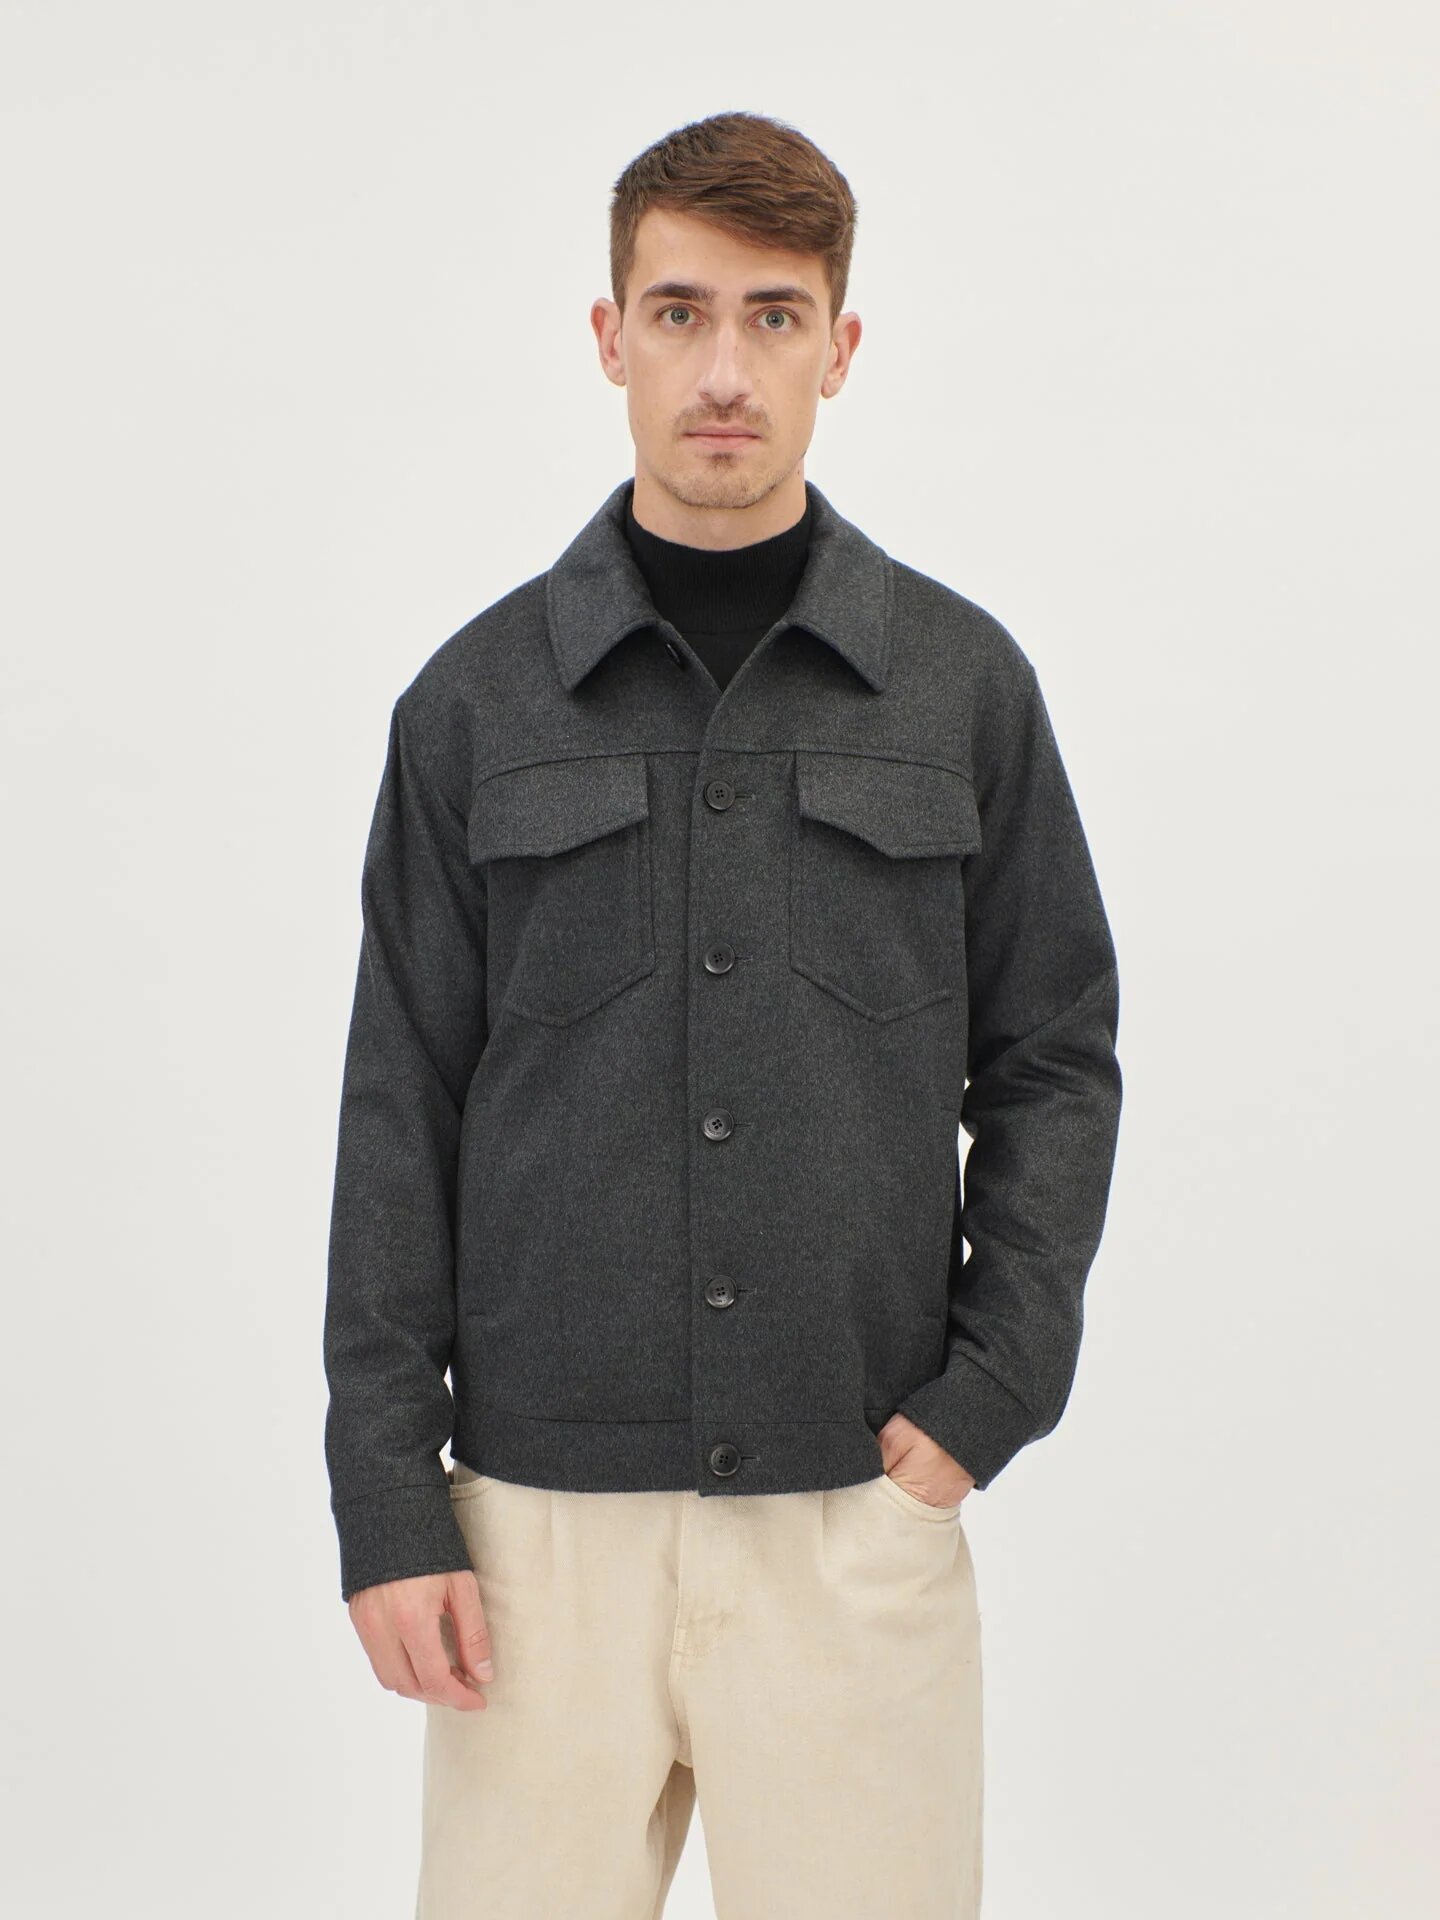 Cashmere Overshirt Jacket Up to 30% Off